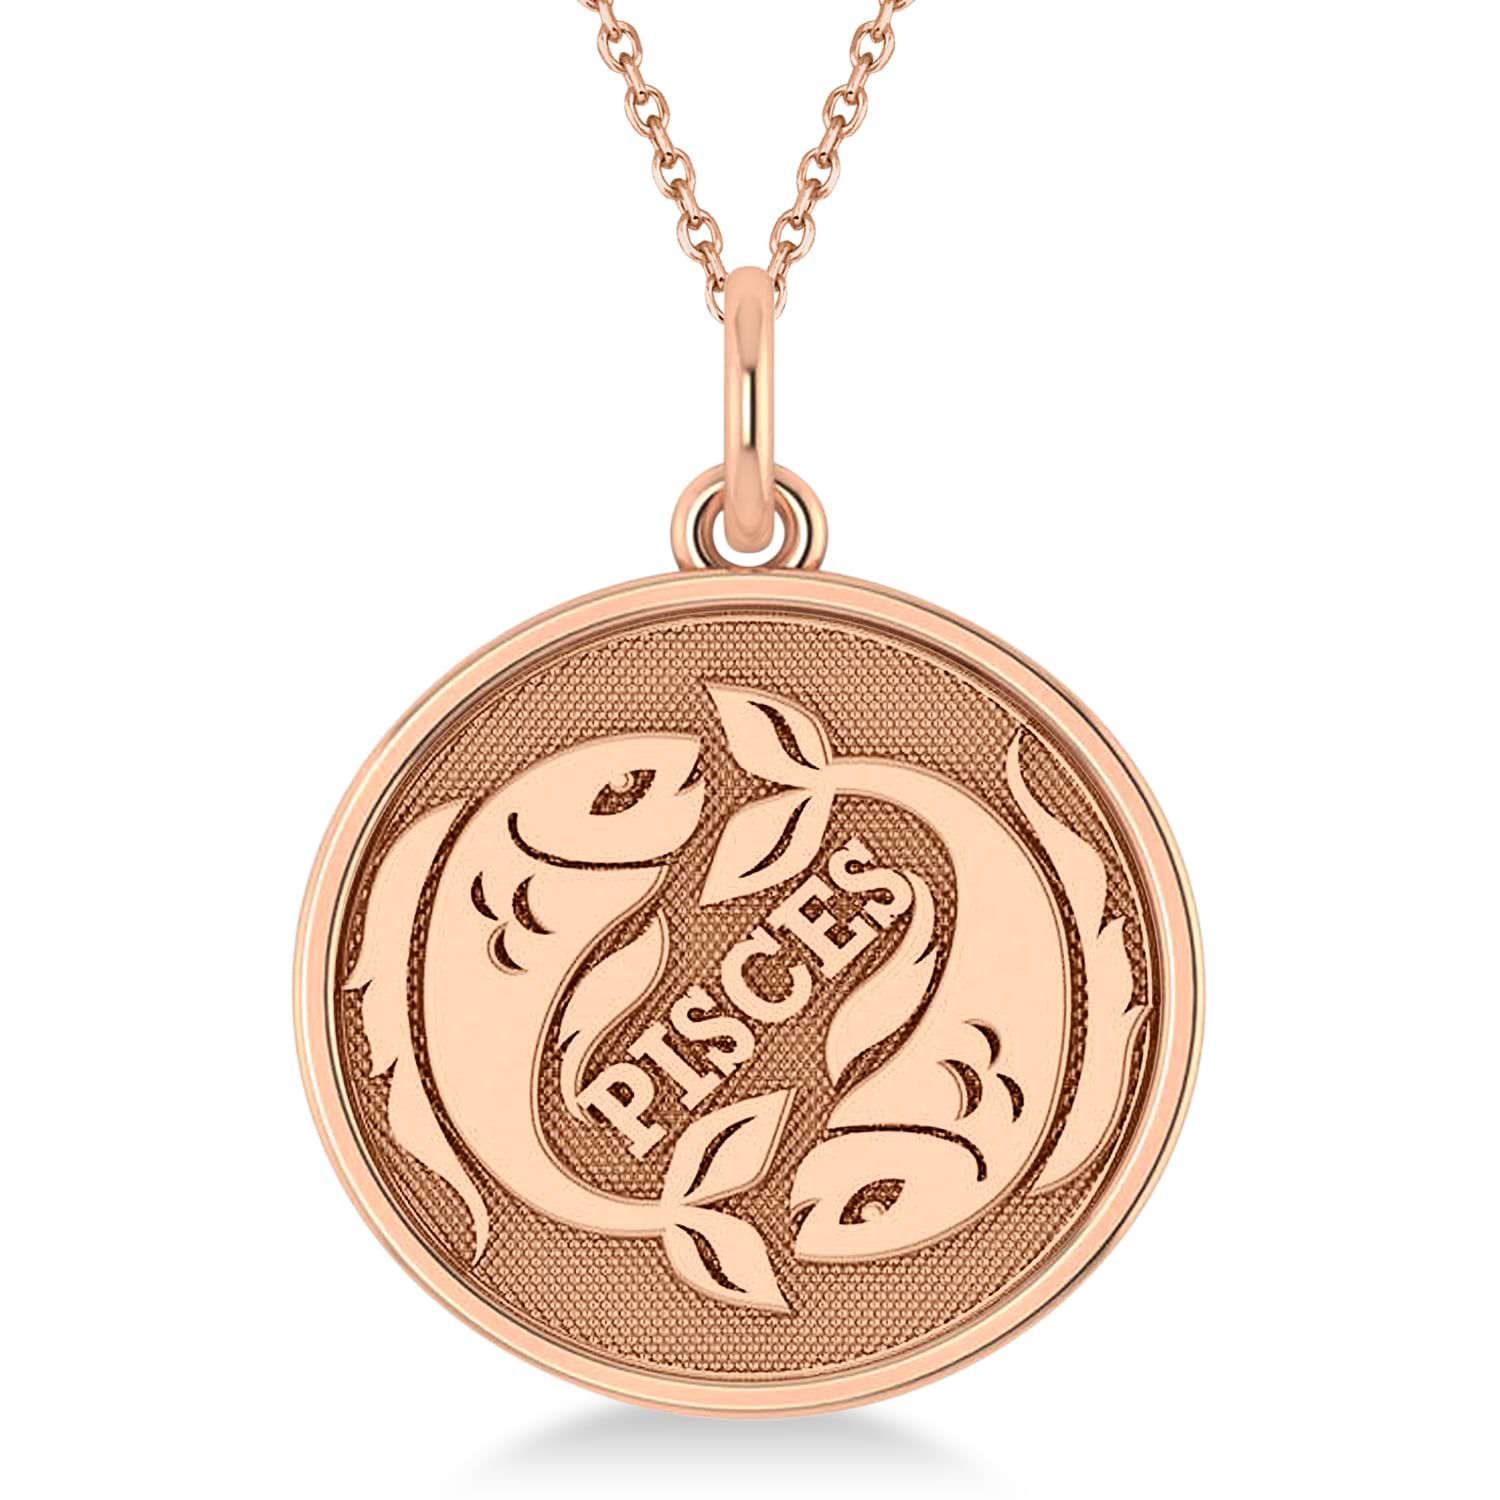 Pisces Coin Zodiac Pendant Necklace 14k Rose Gold